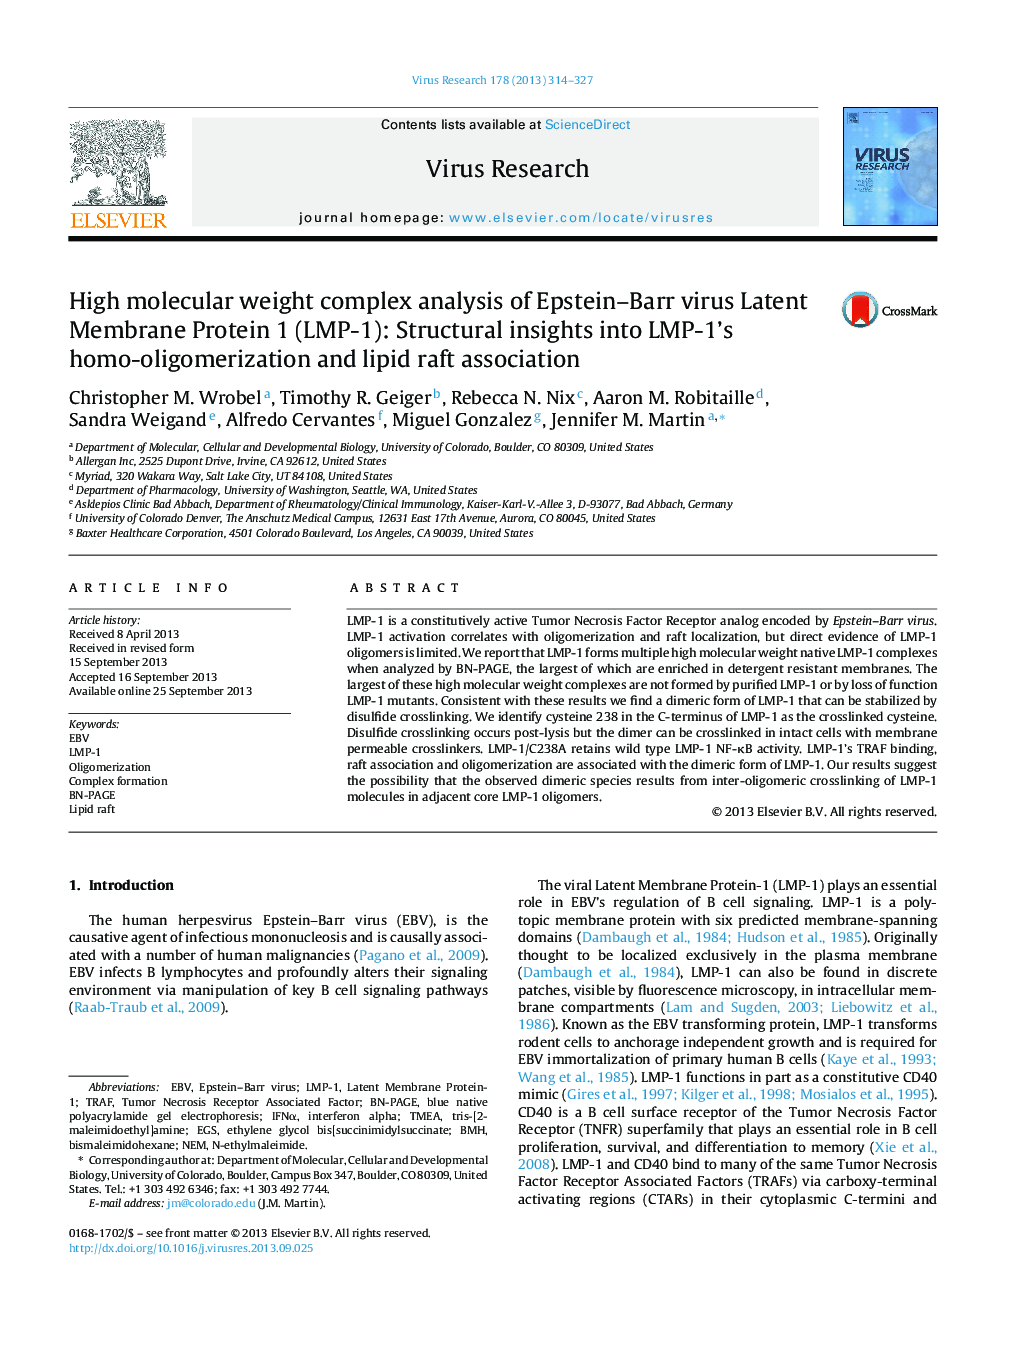 High molecular weight complex analysis of Epstein-Barr virus Latent Membrane Protein 1 (LMP-1): Structural insights into LMP-1's homo-oligomerization and lipid raft association